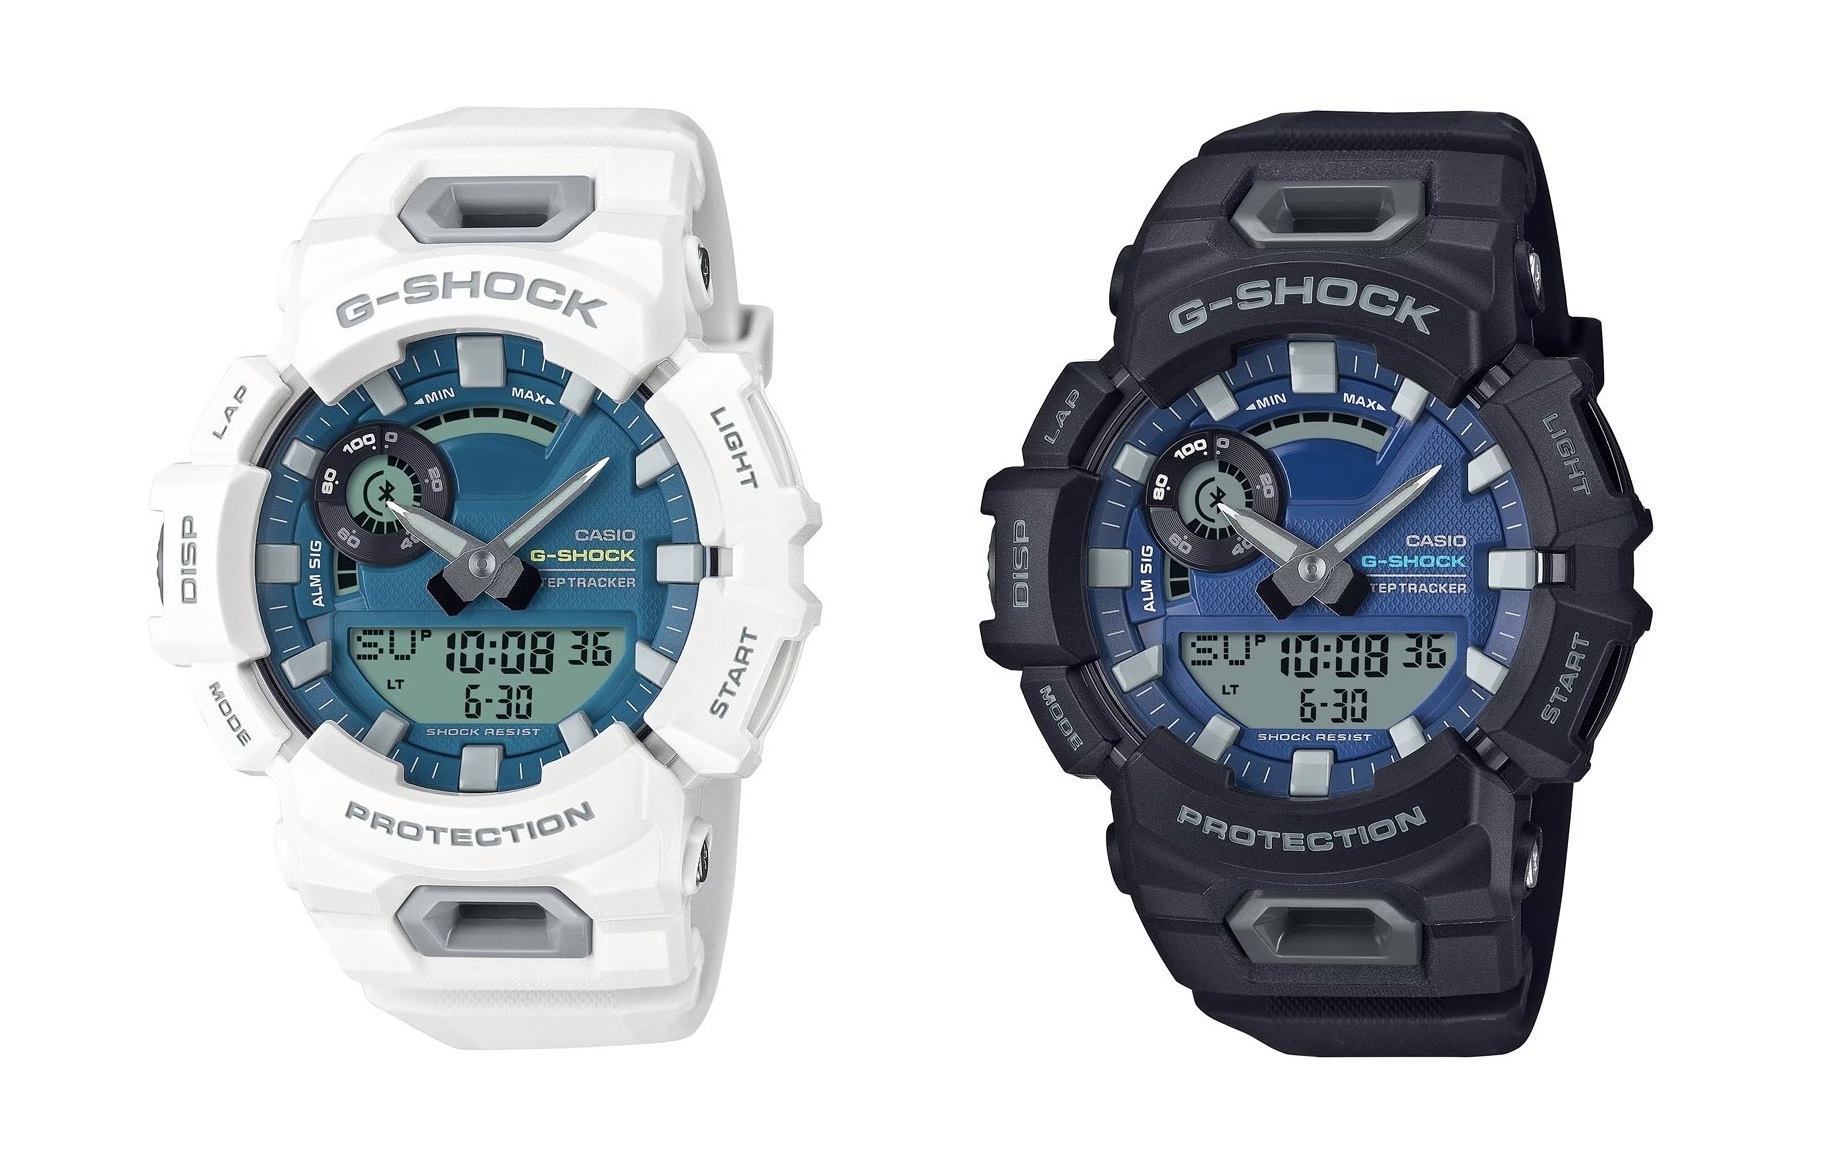 Casio представила часы G-Shock GBA-900CB-7A и GBA-900CB-1A